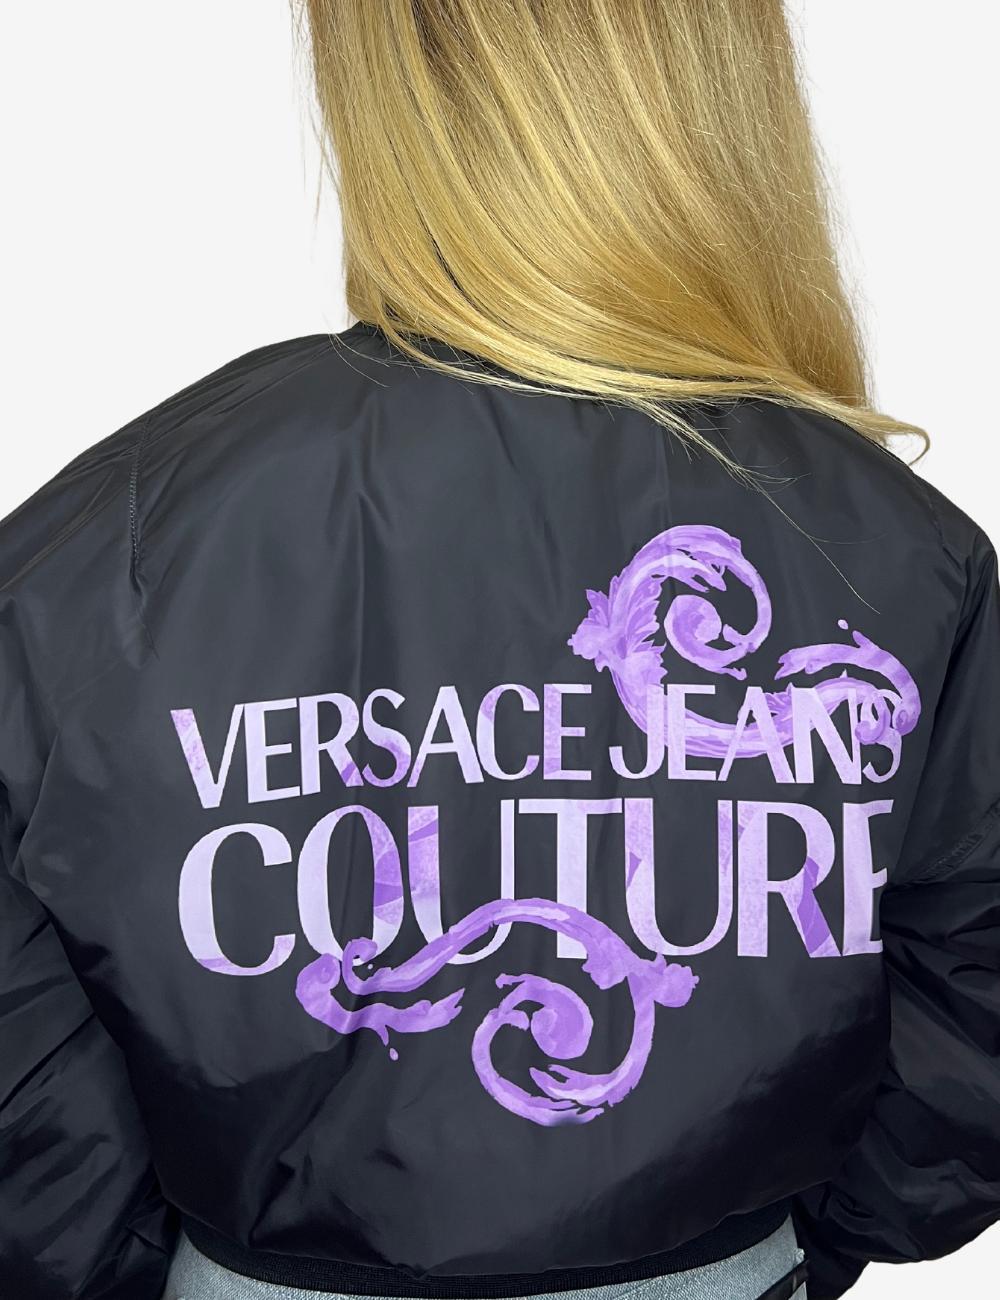 Giubbotto Versace Jeans Couture reversibile donna